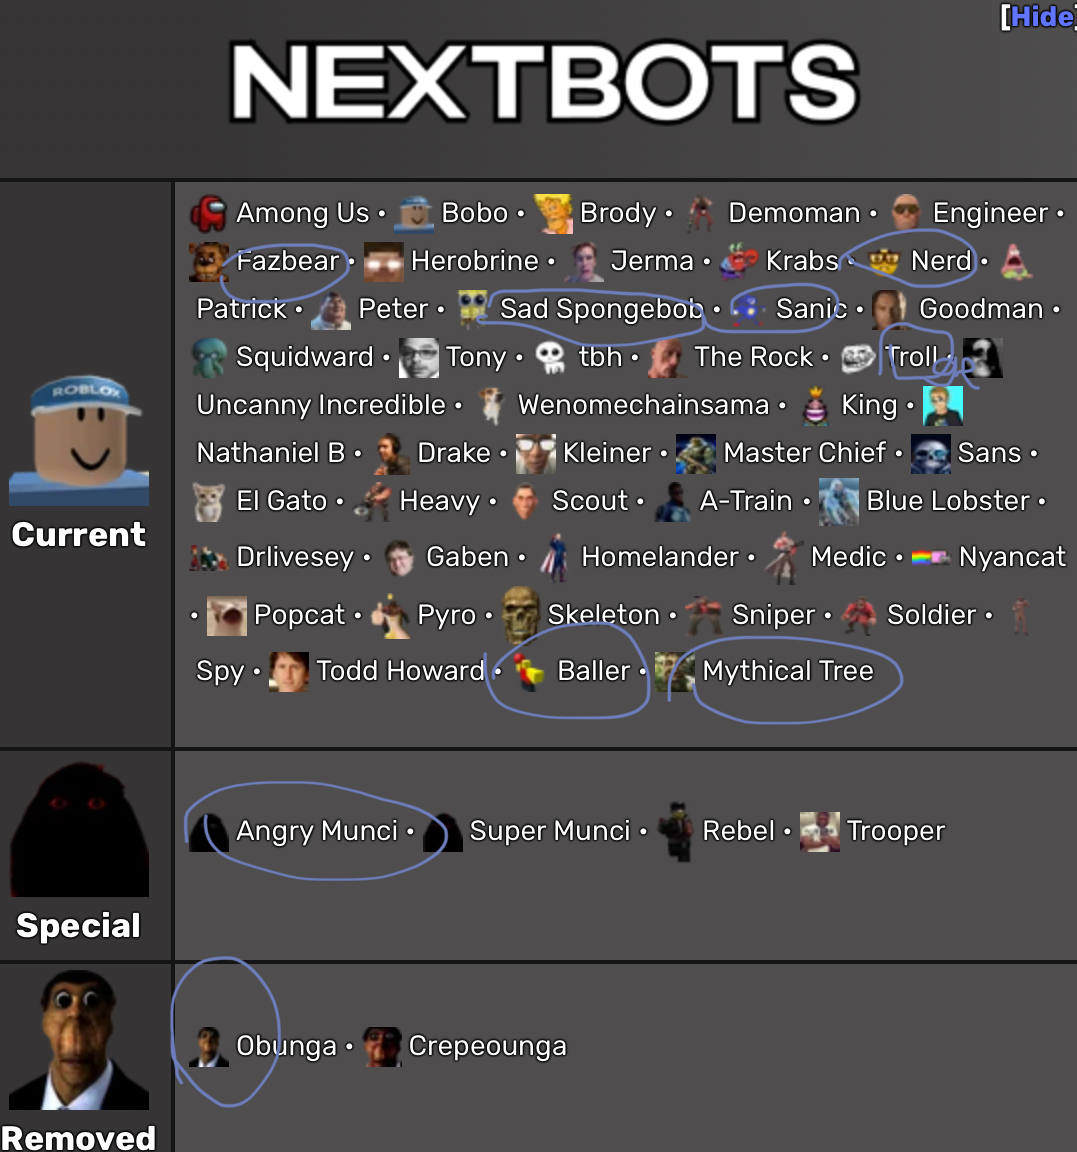 Nico's Nextbots Angry Munci vs Evade Angry Munci [Roblox] 